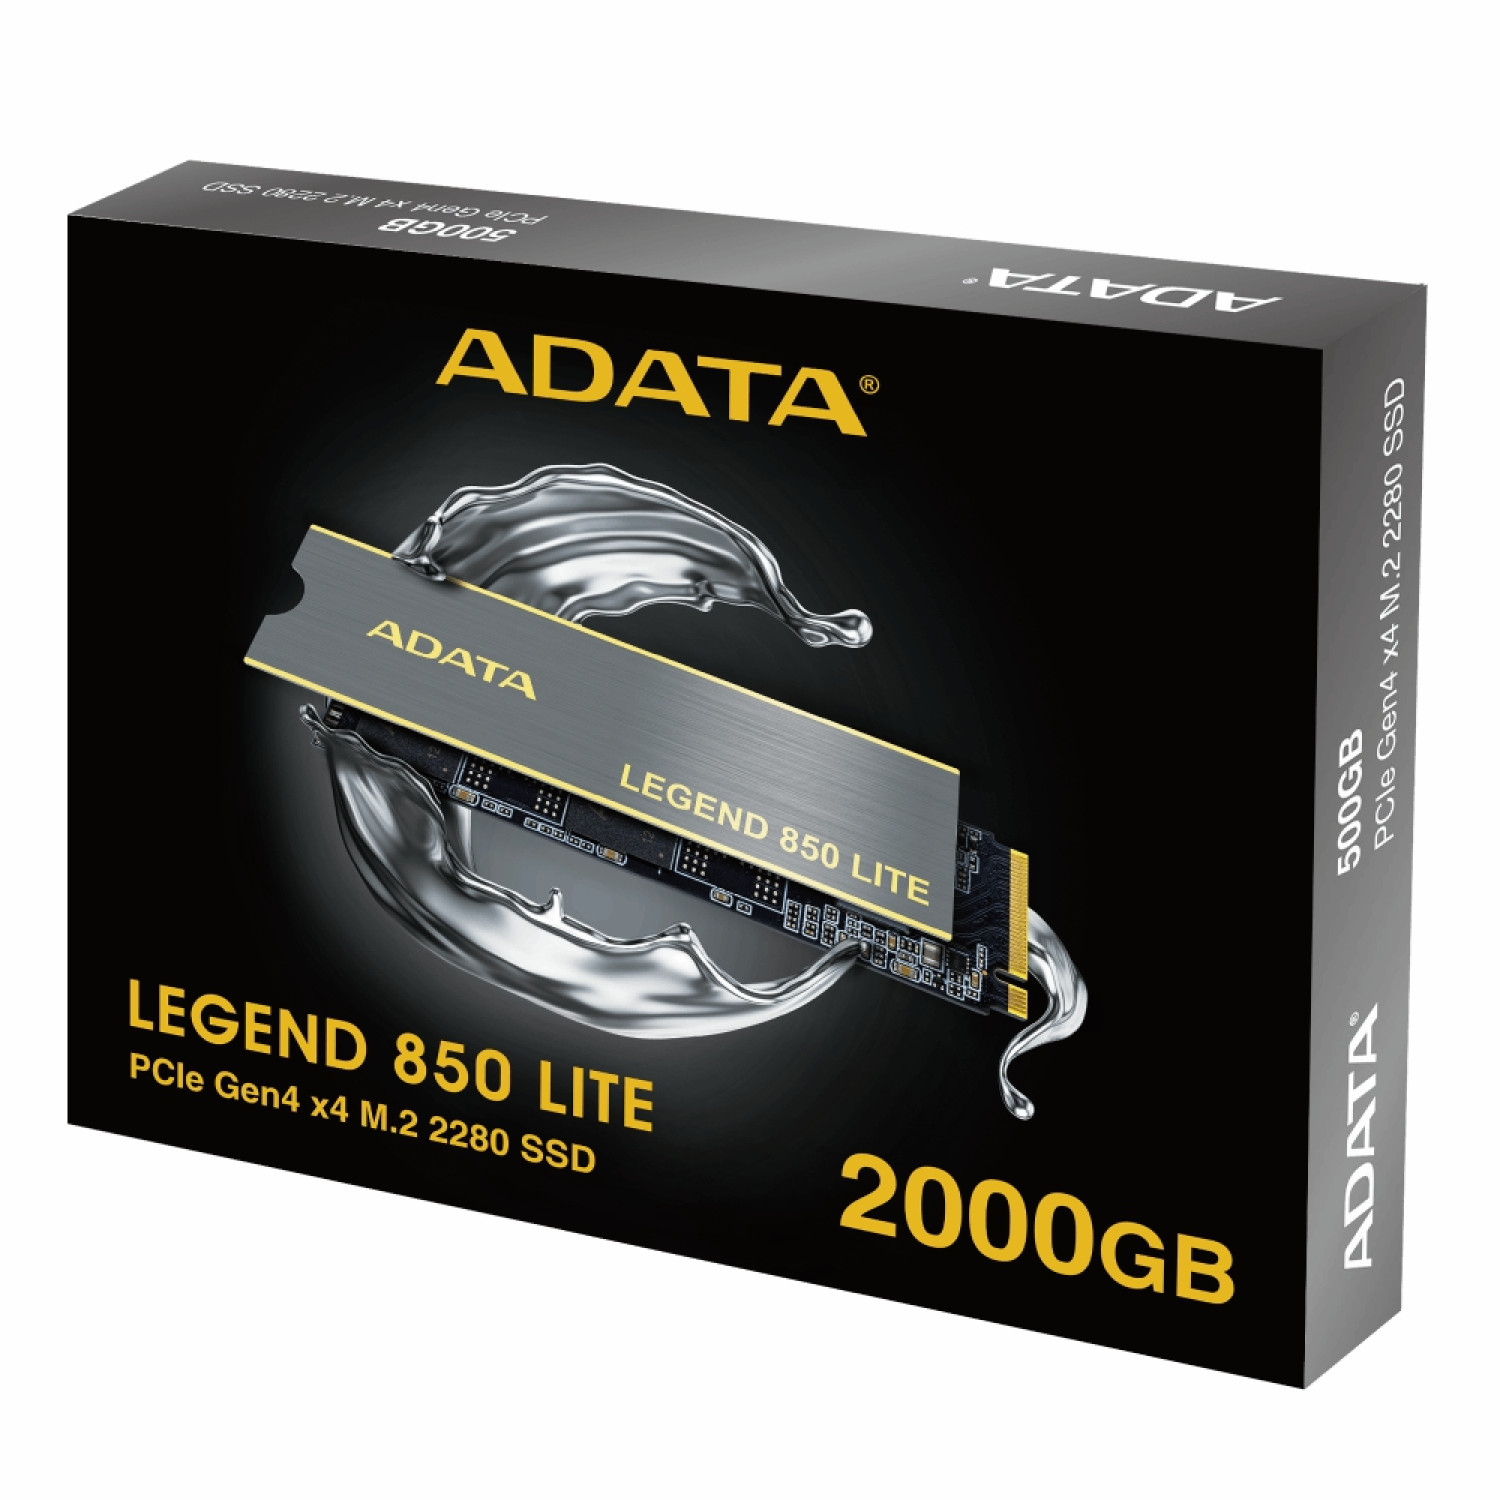 حافظه اس اس دی ADATA Legend 850 Lite 2TB - for PS5-8